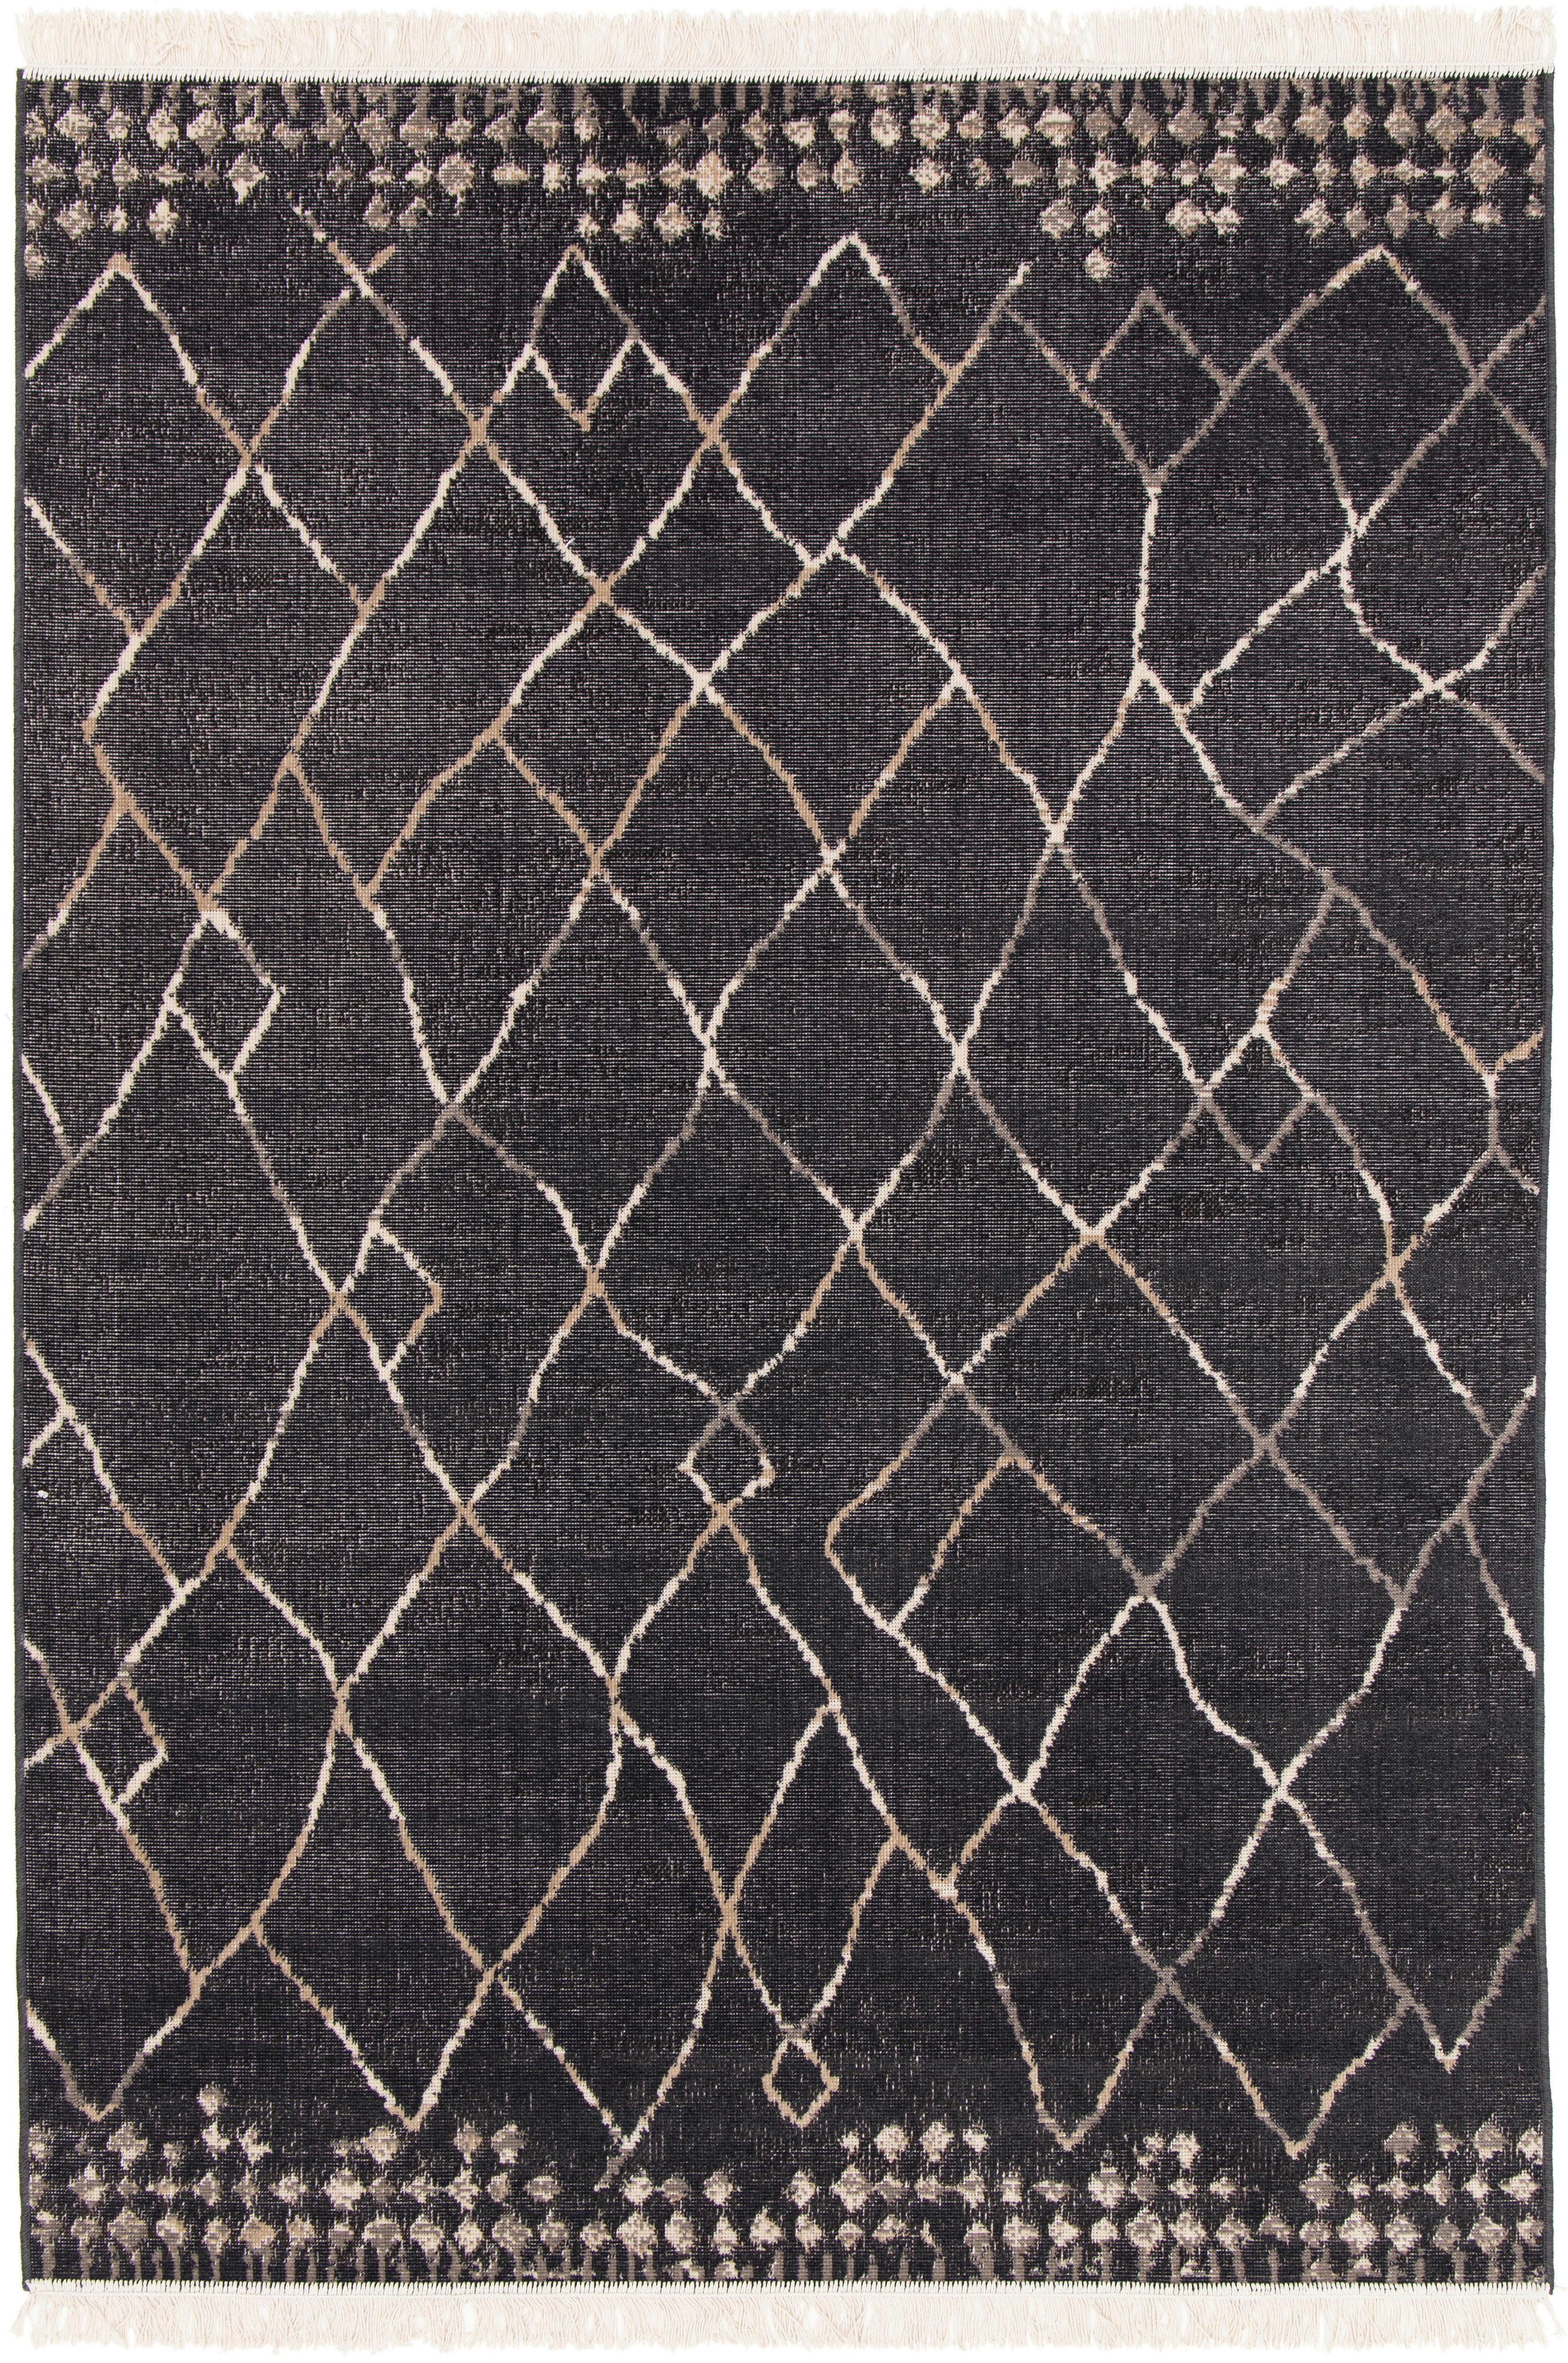 Tepih Niskog Tkanja Berclon 1 - antracit/krem, Modern, tekstil (80/150cm) - Modern Living